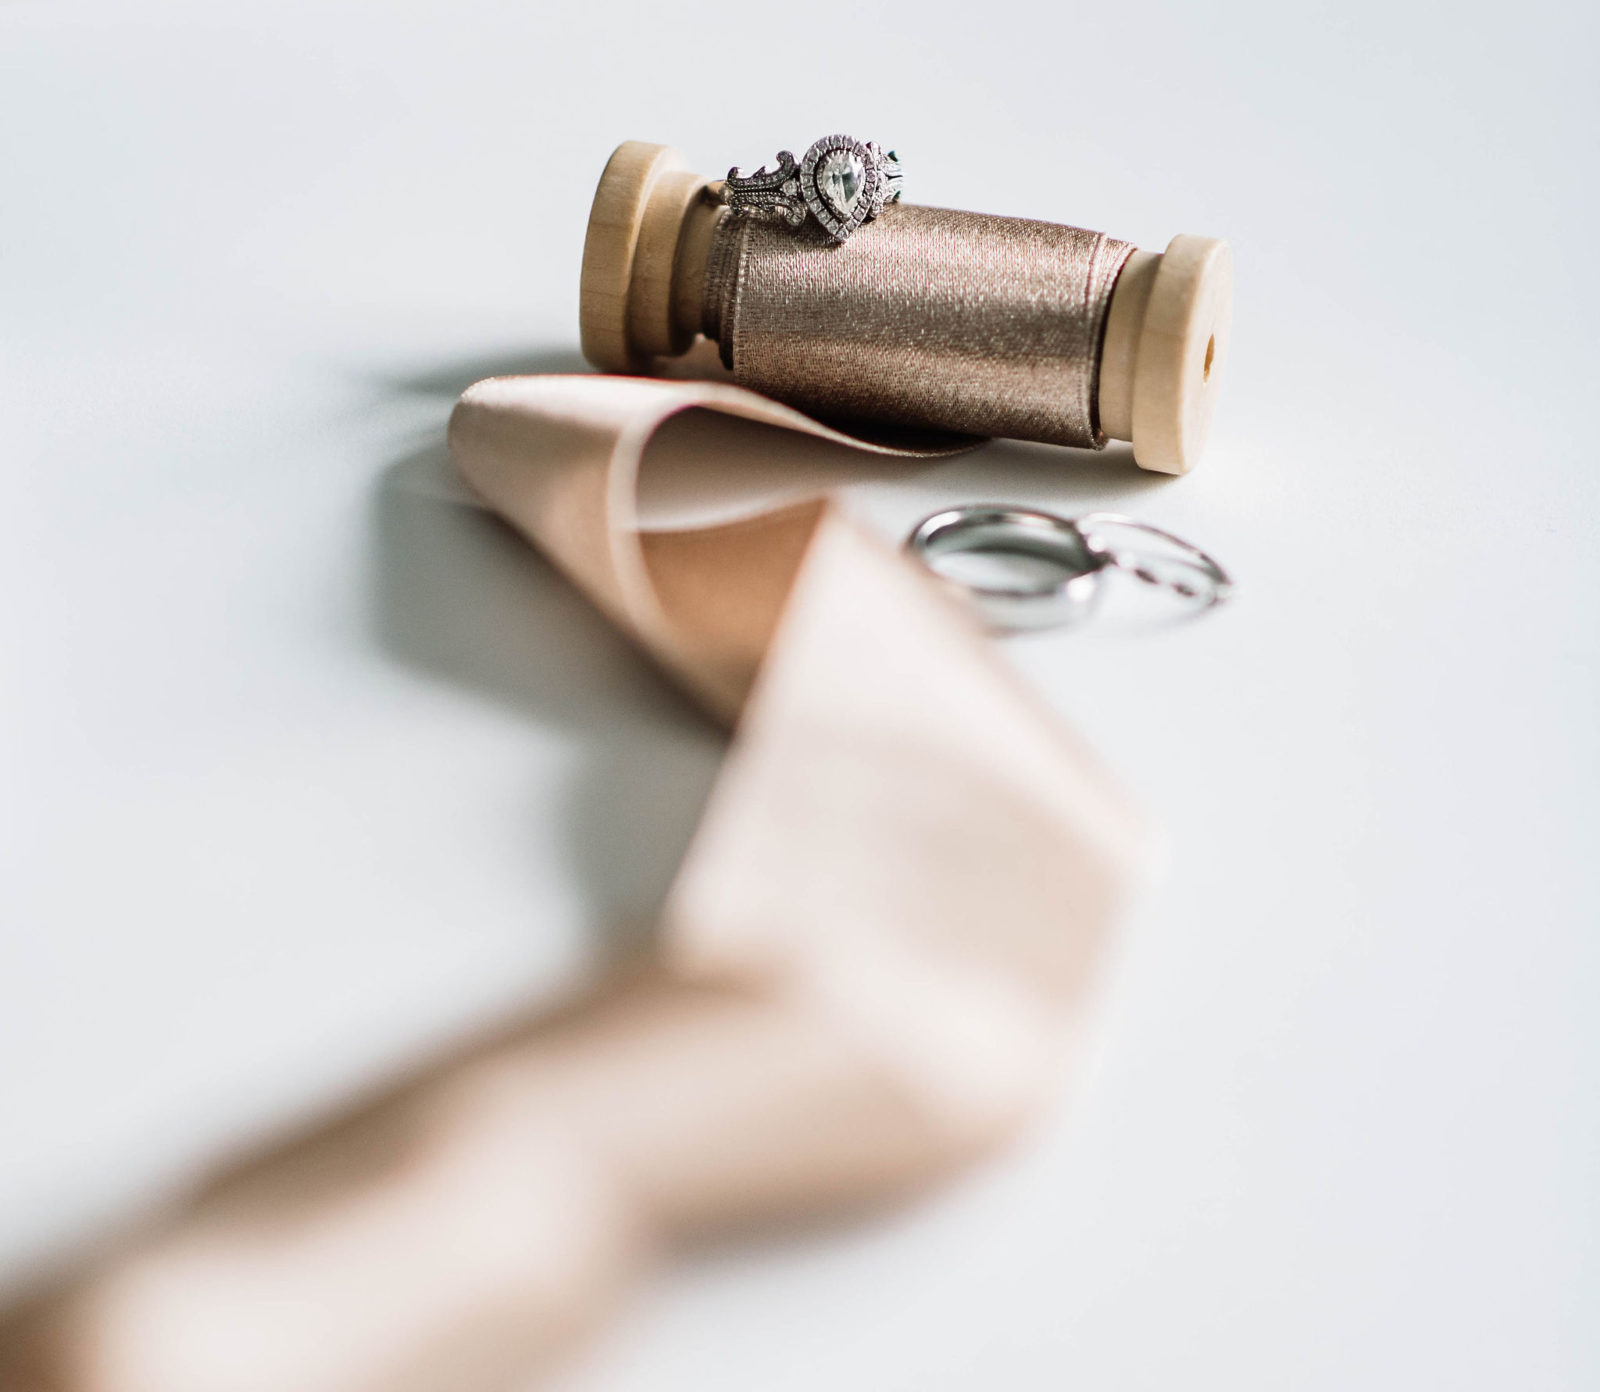 Vera Wang engagement ring on a spool of bronze metallic silk ribbon